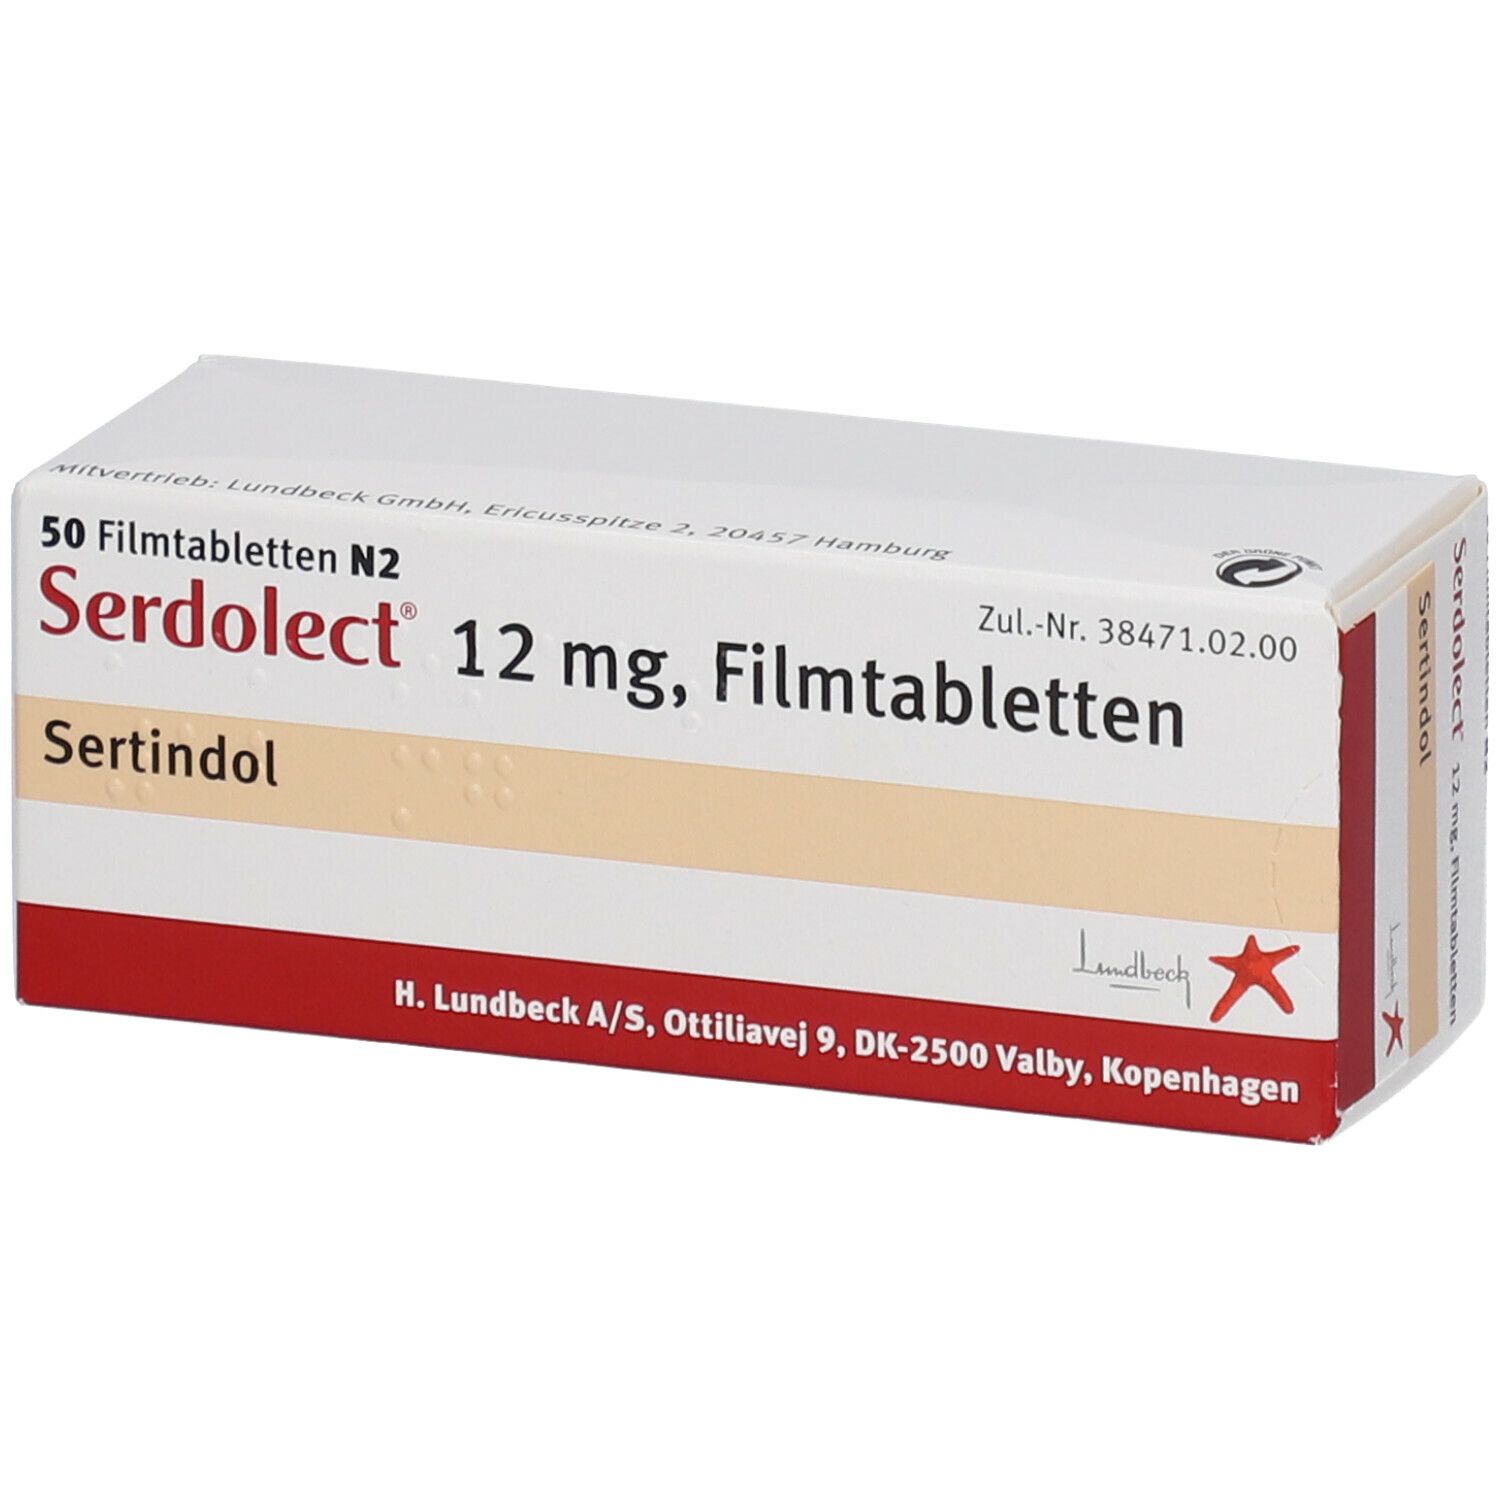 Serdolect® 12 mg